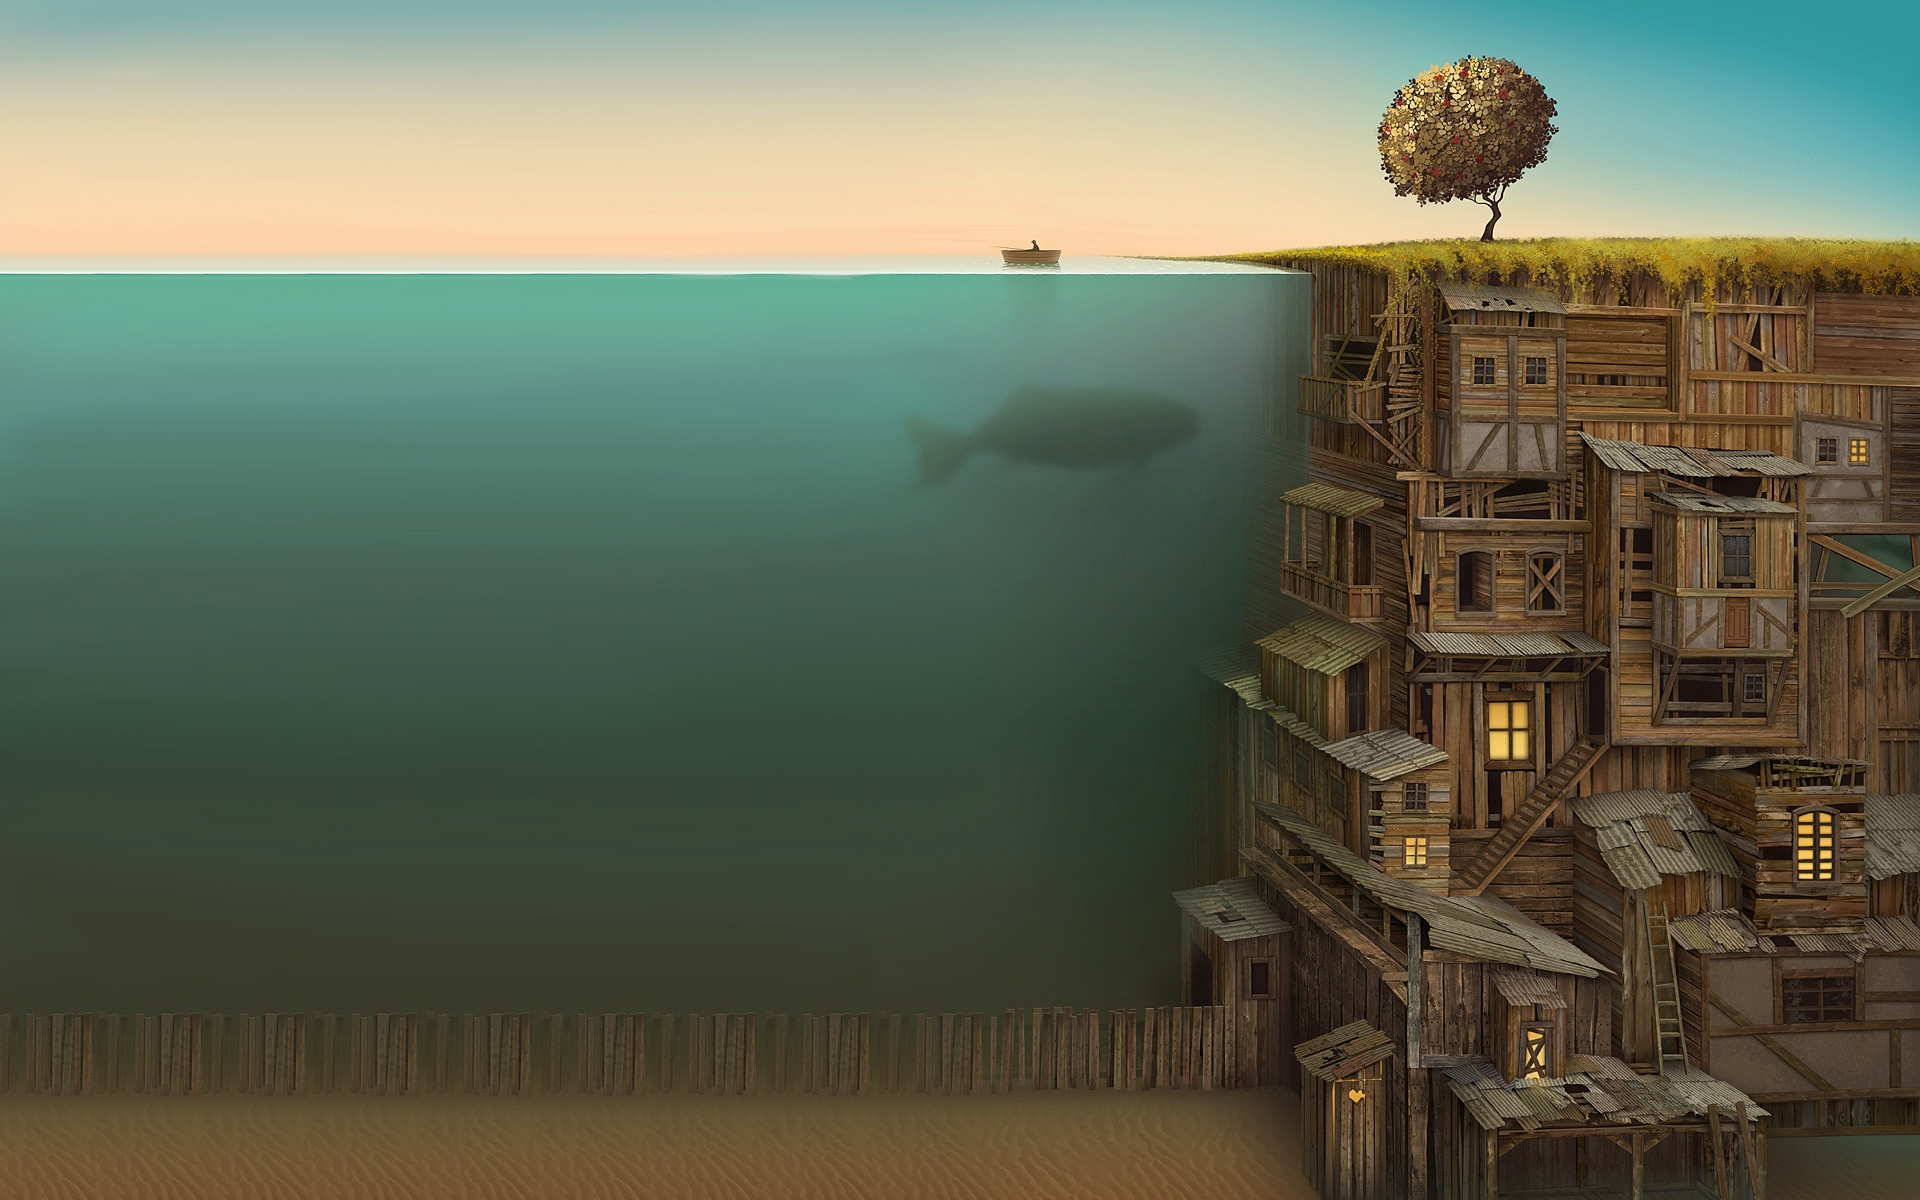 A subterranean city on the ocean